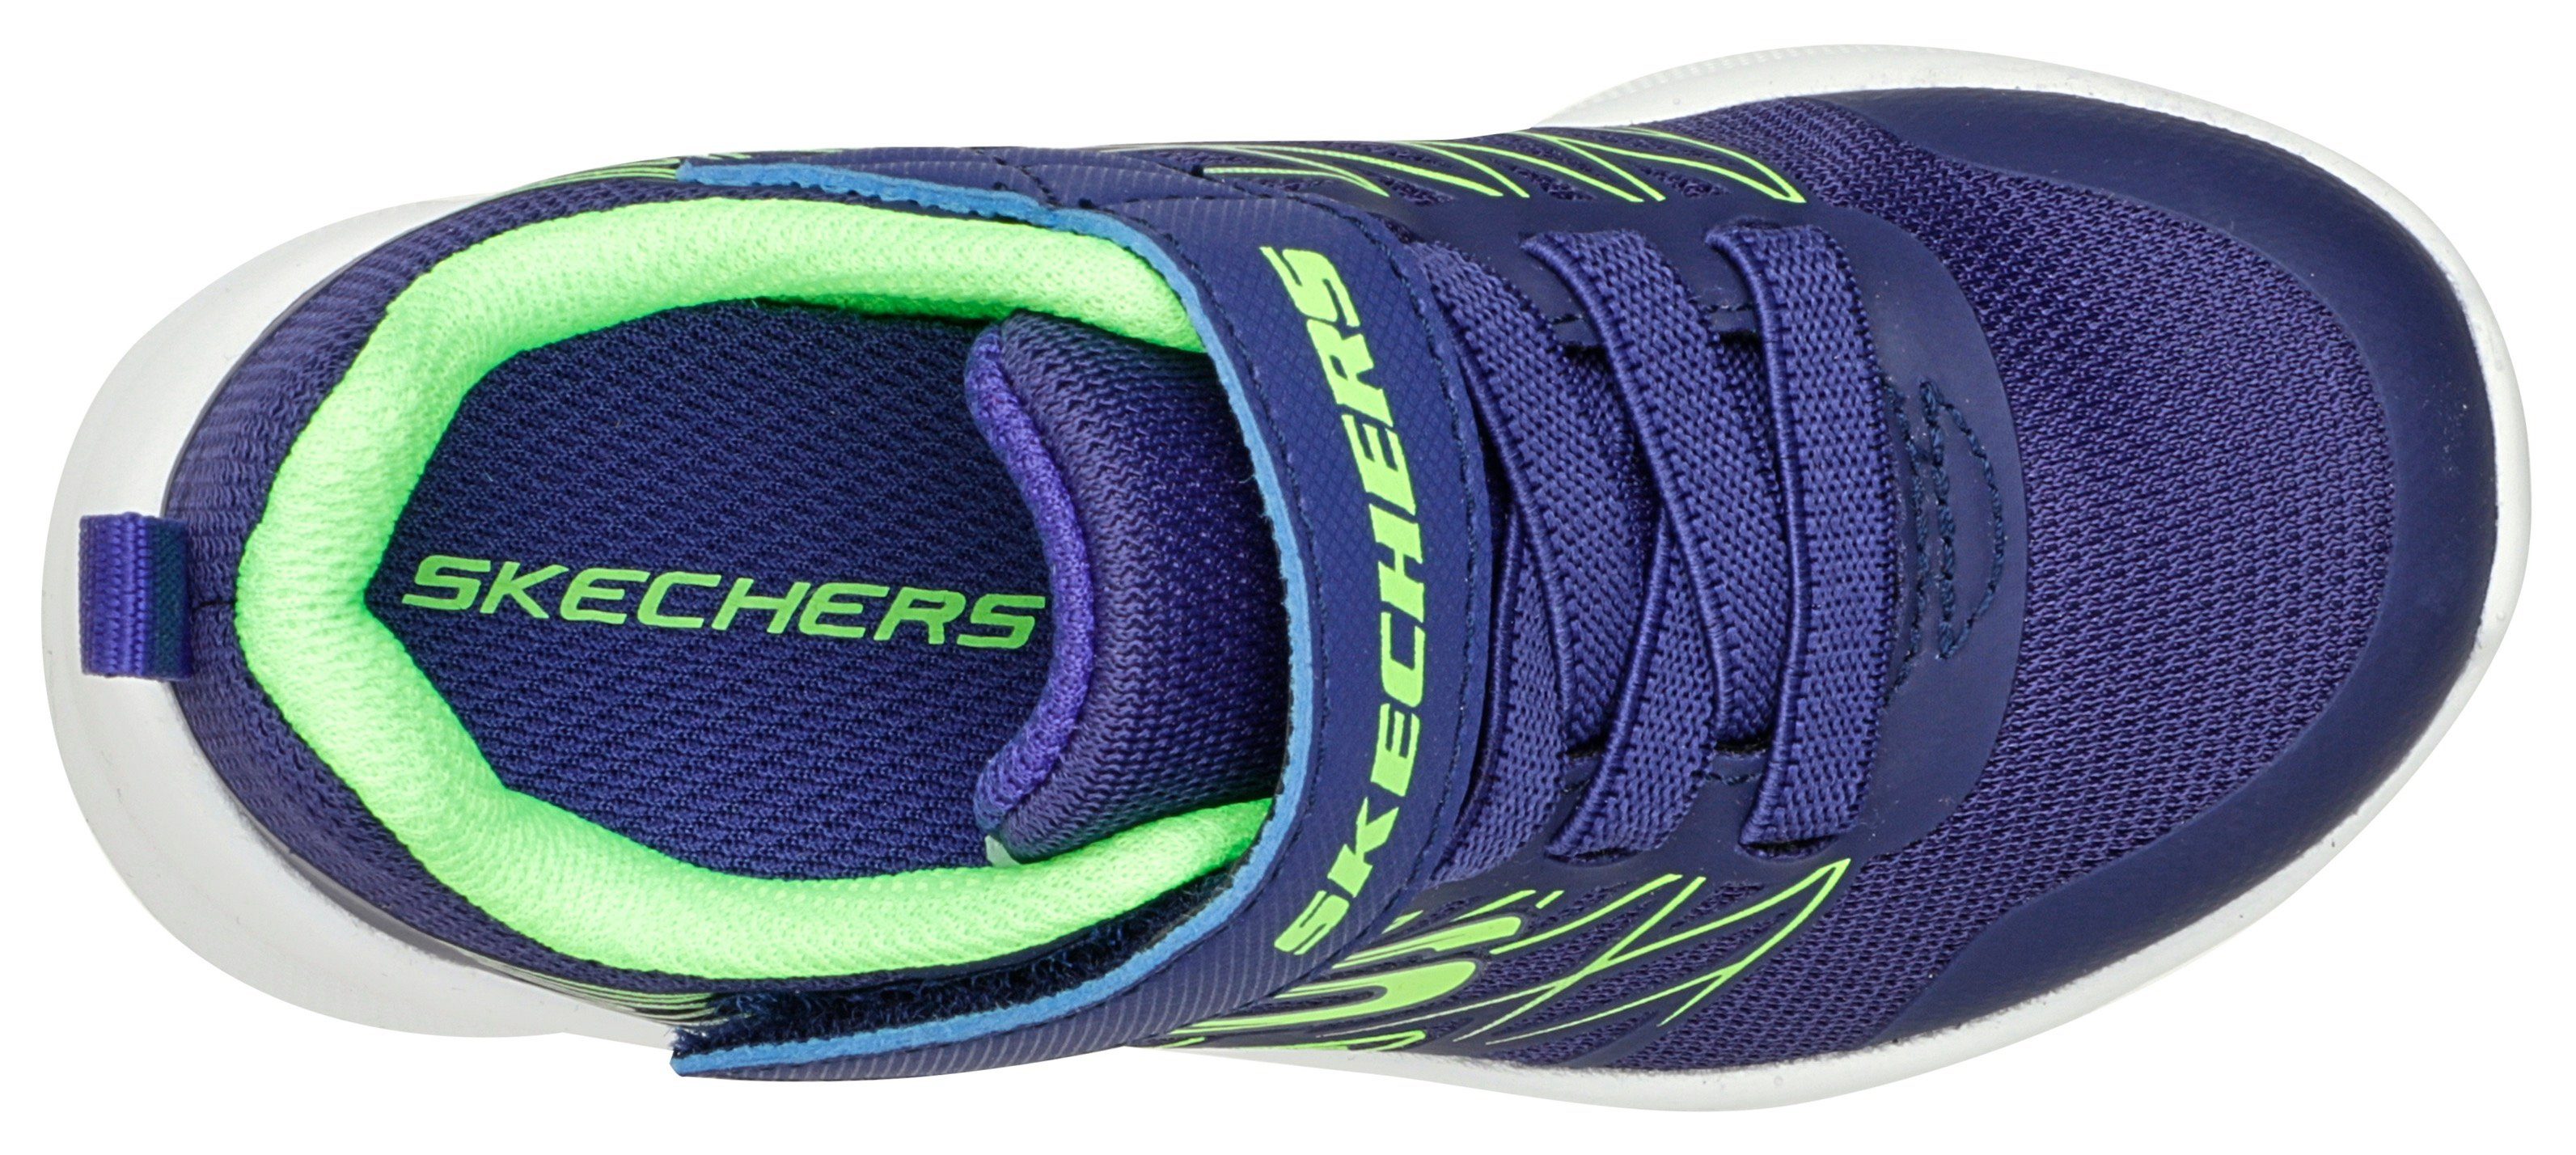 TEXLOR Kids mit Skechers leichter MICROSPEC Laufsohle Sneaker